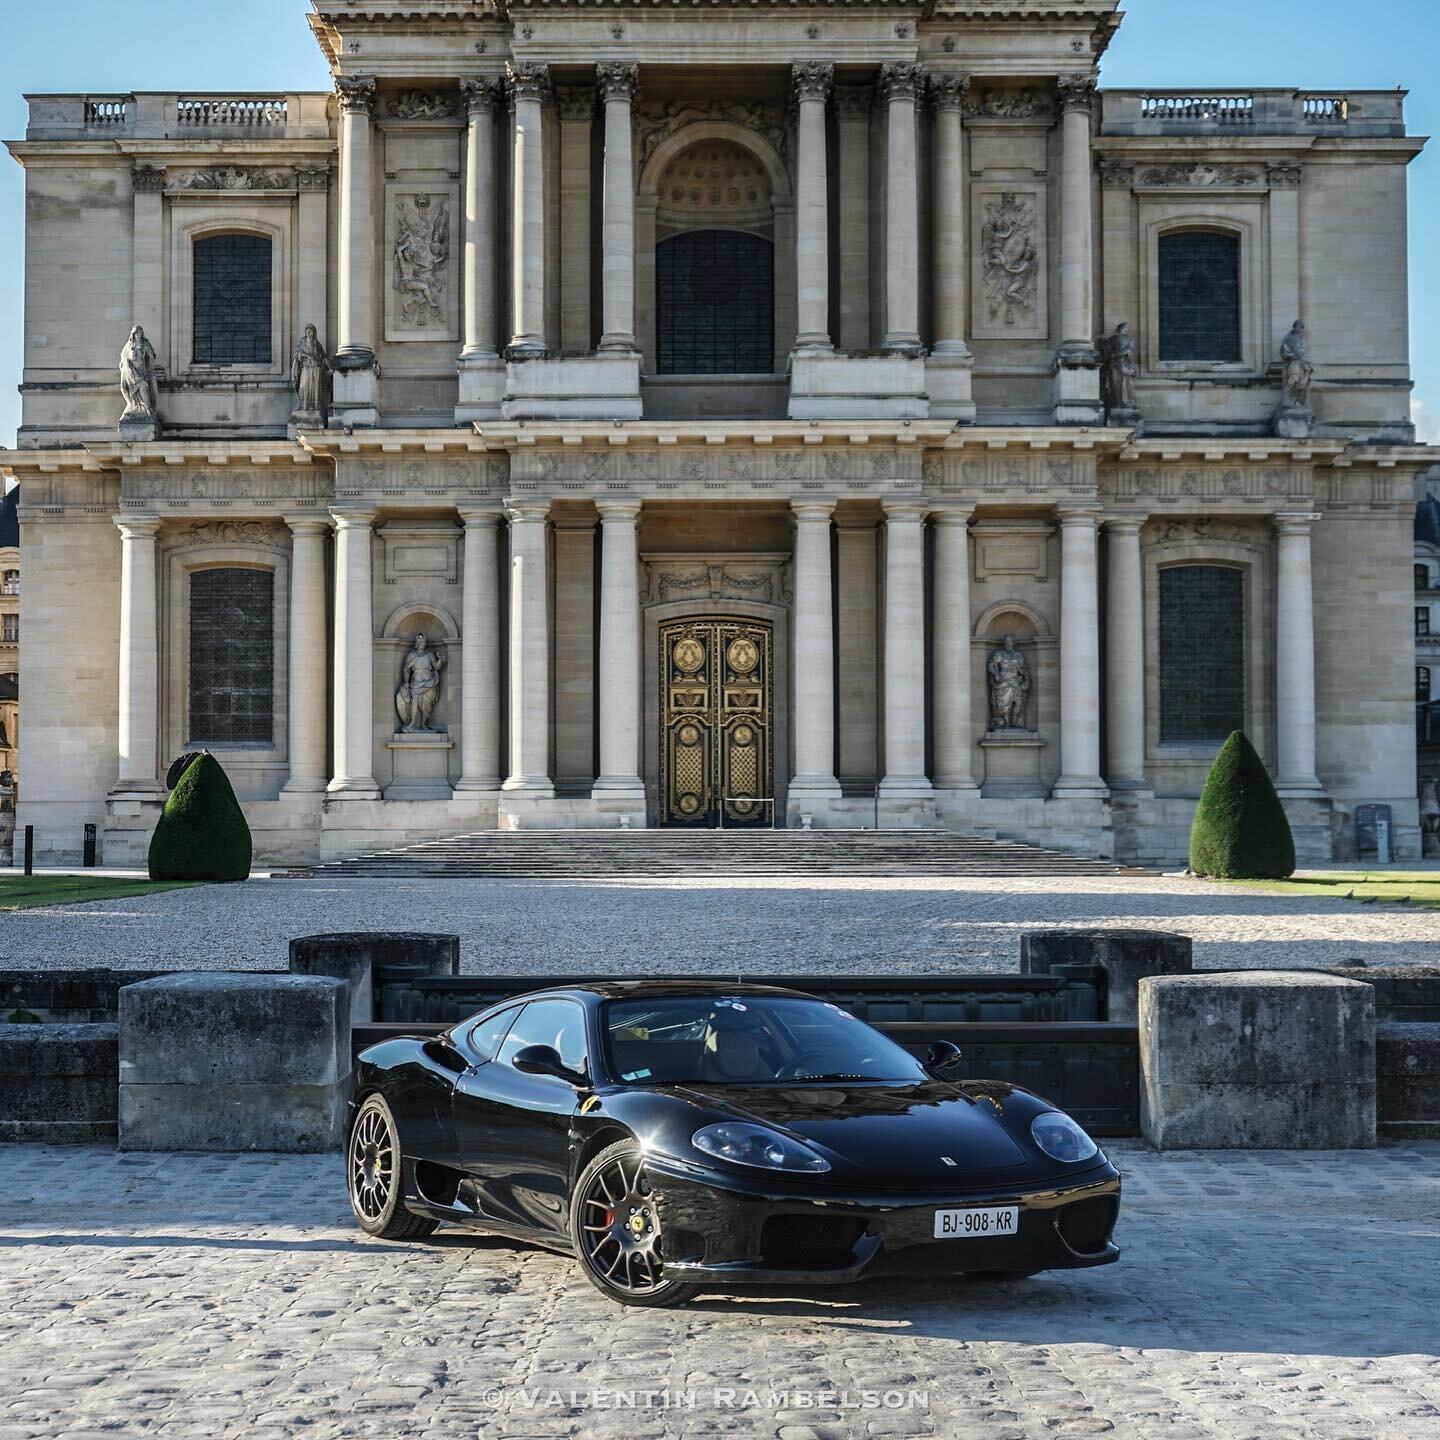 For sale: Ferrari 360 Modena &ldquo;stradale&rdquo;
Int&eacute;rieur cuir havane et carbone 
Silencieux Inox grille challenge 
Full set 

@simon.dinosport 🇮🇹
@valentinrambelson 📸

#ferrari #ferrariclassics #ferrari360 #ferrari360modena #ferrari360